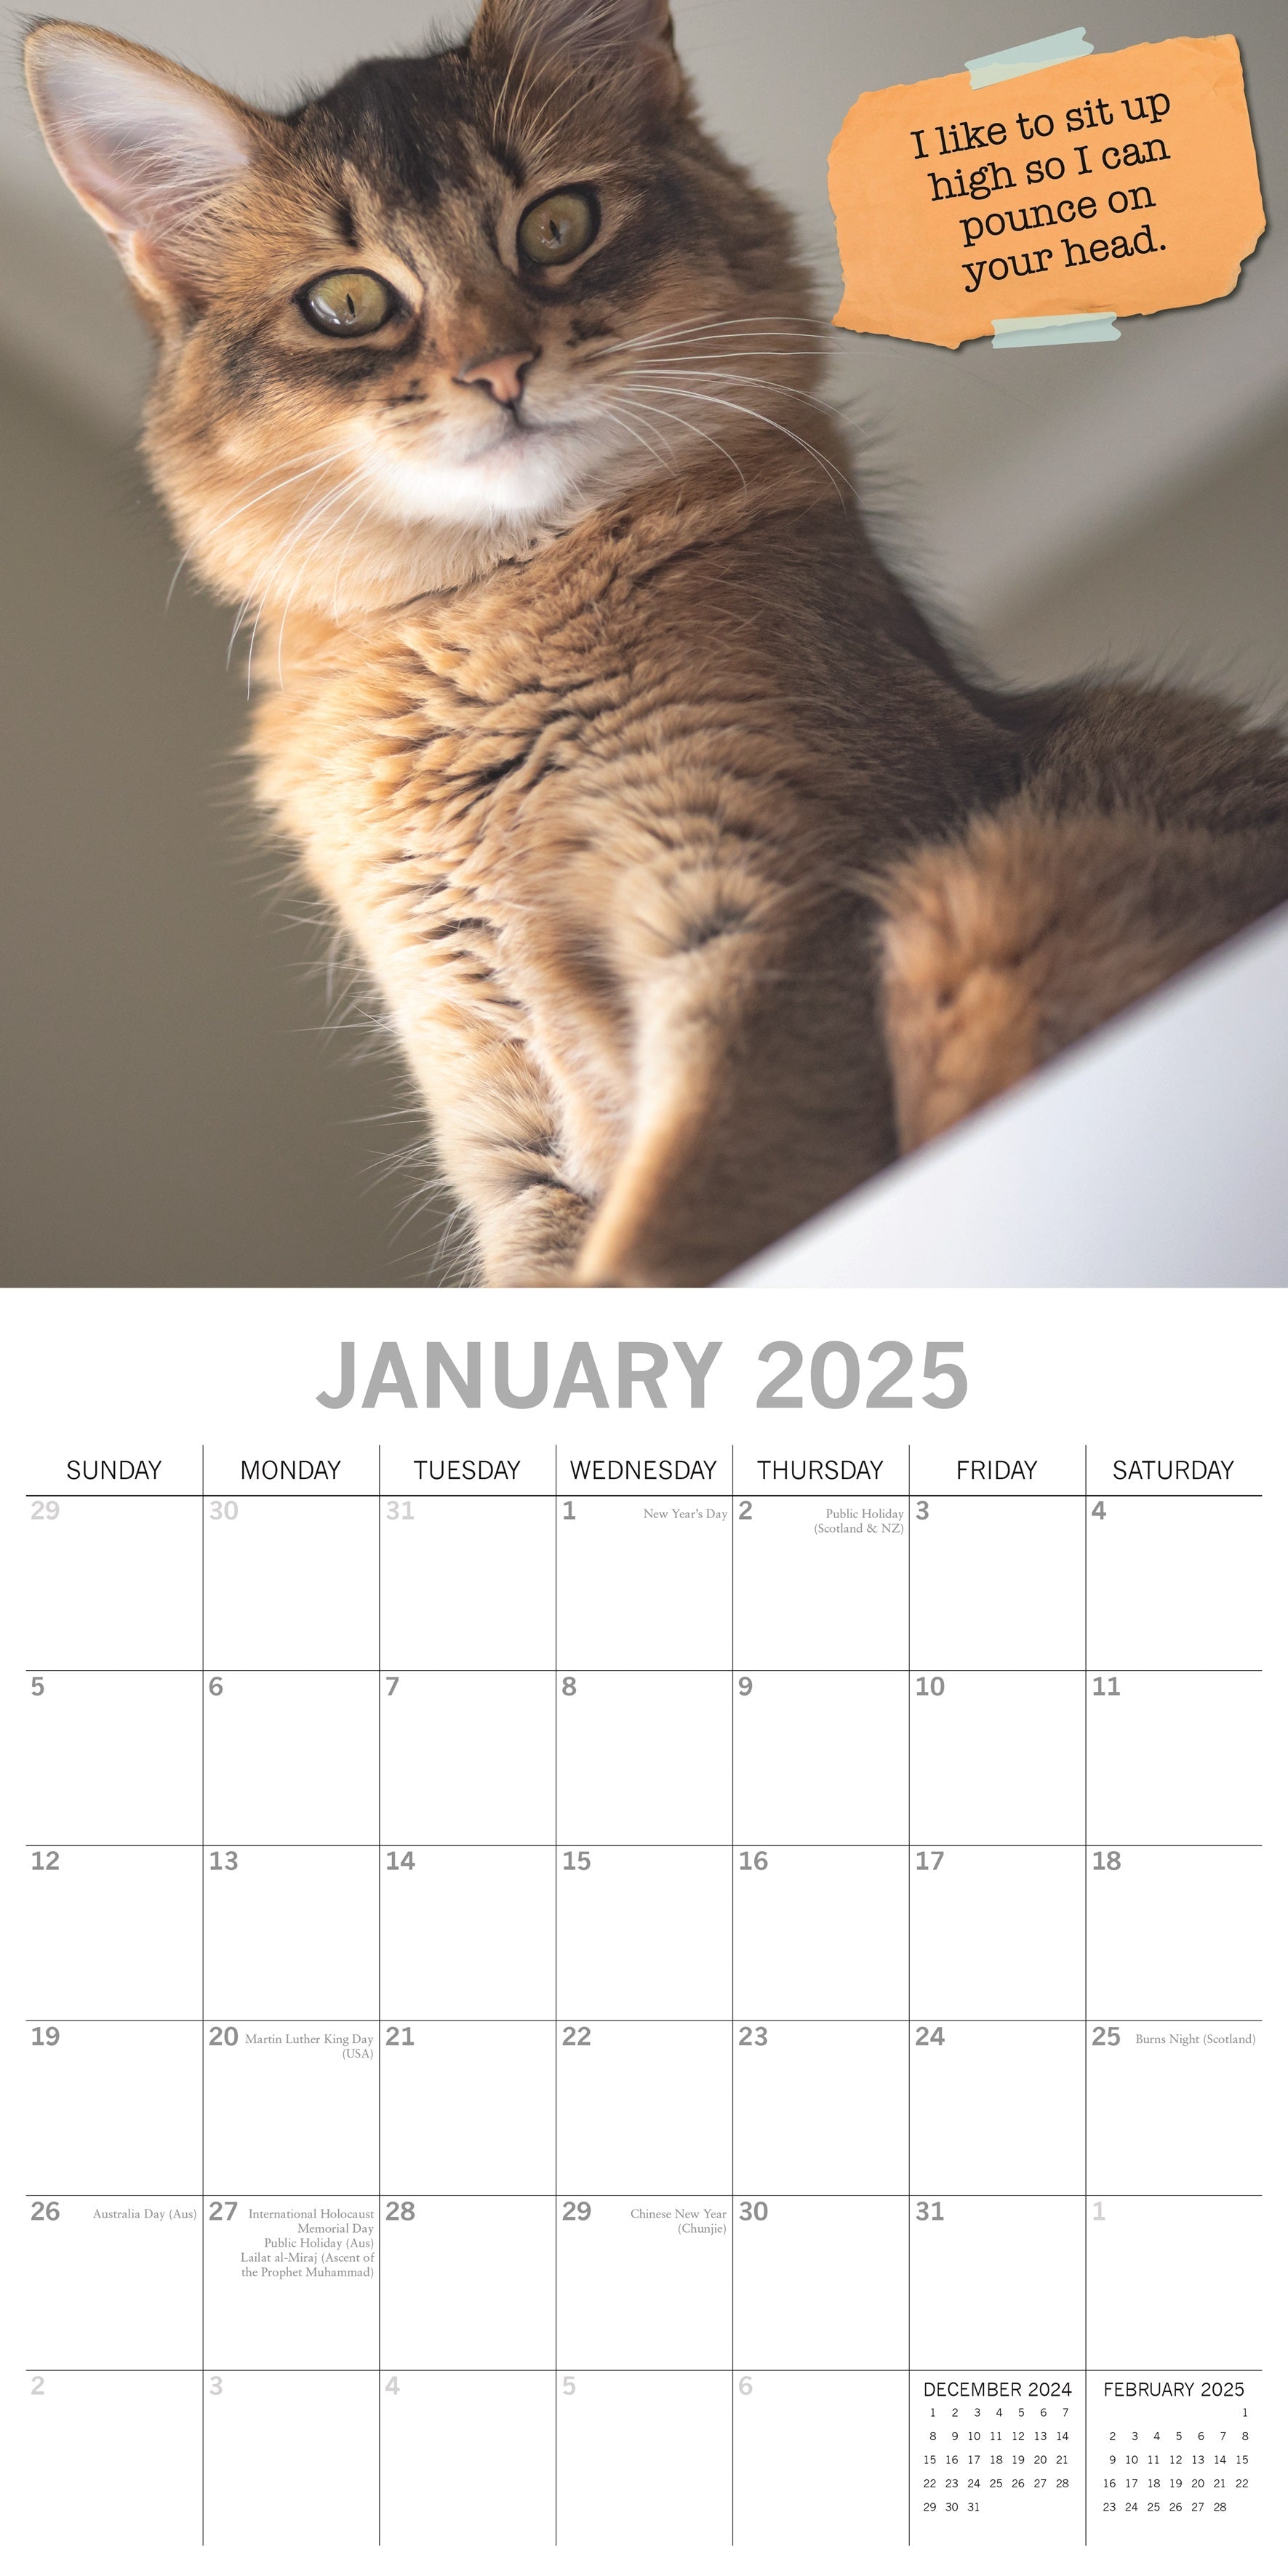 2025 Cat Shaming - Square Wall Calendar